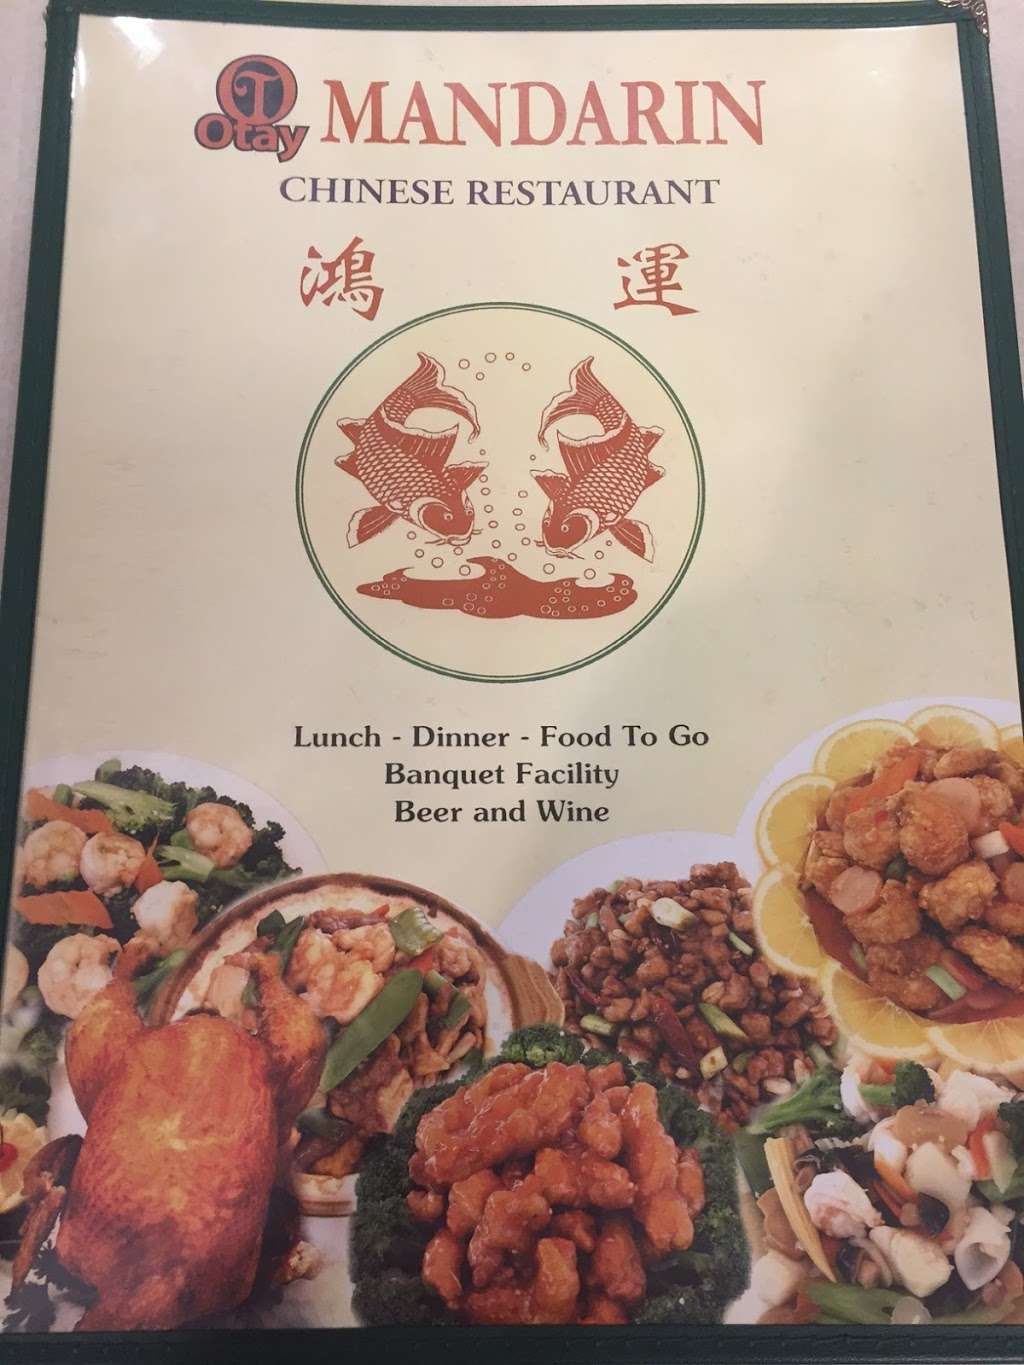 Otay Mandarin Chinese Restaurant | 945-A Otay Lakes Rd, Chula Vista, CA 91913, USA | Phone: (619) 656-8080